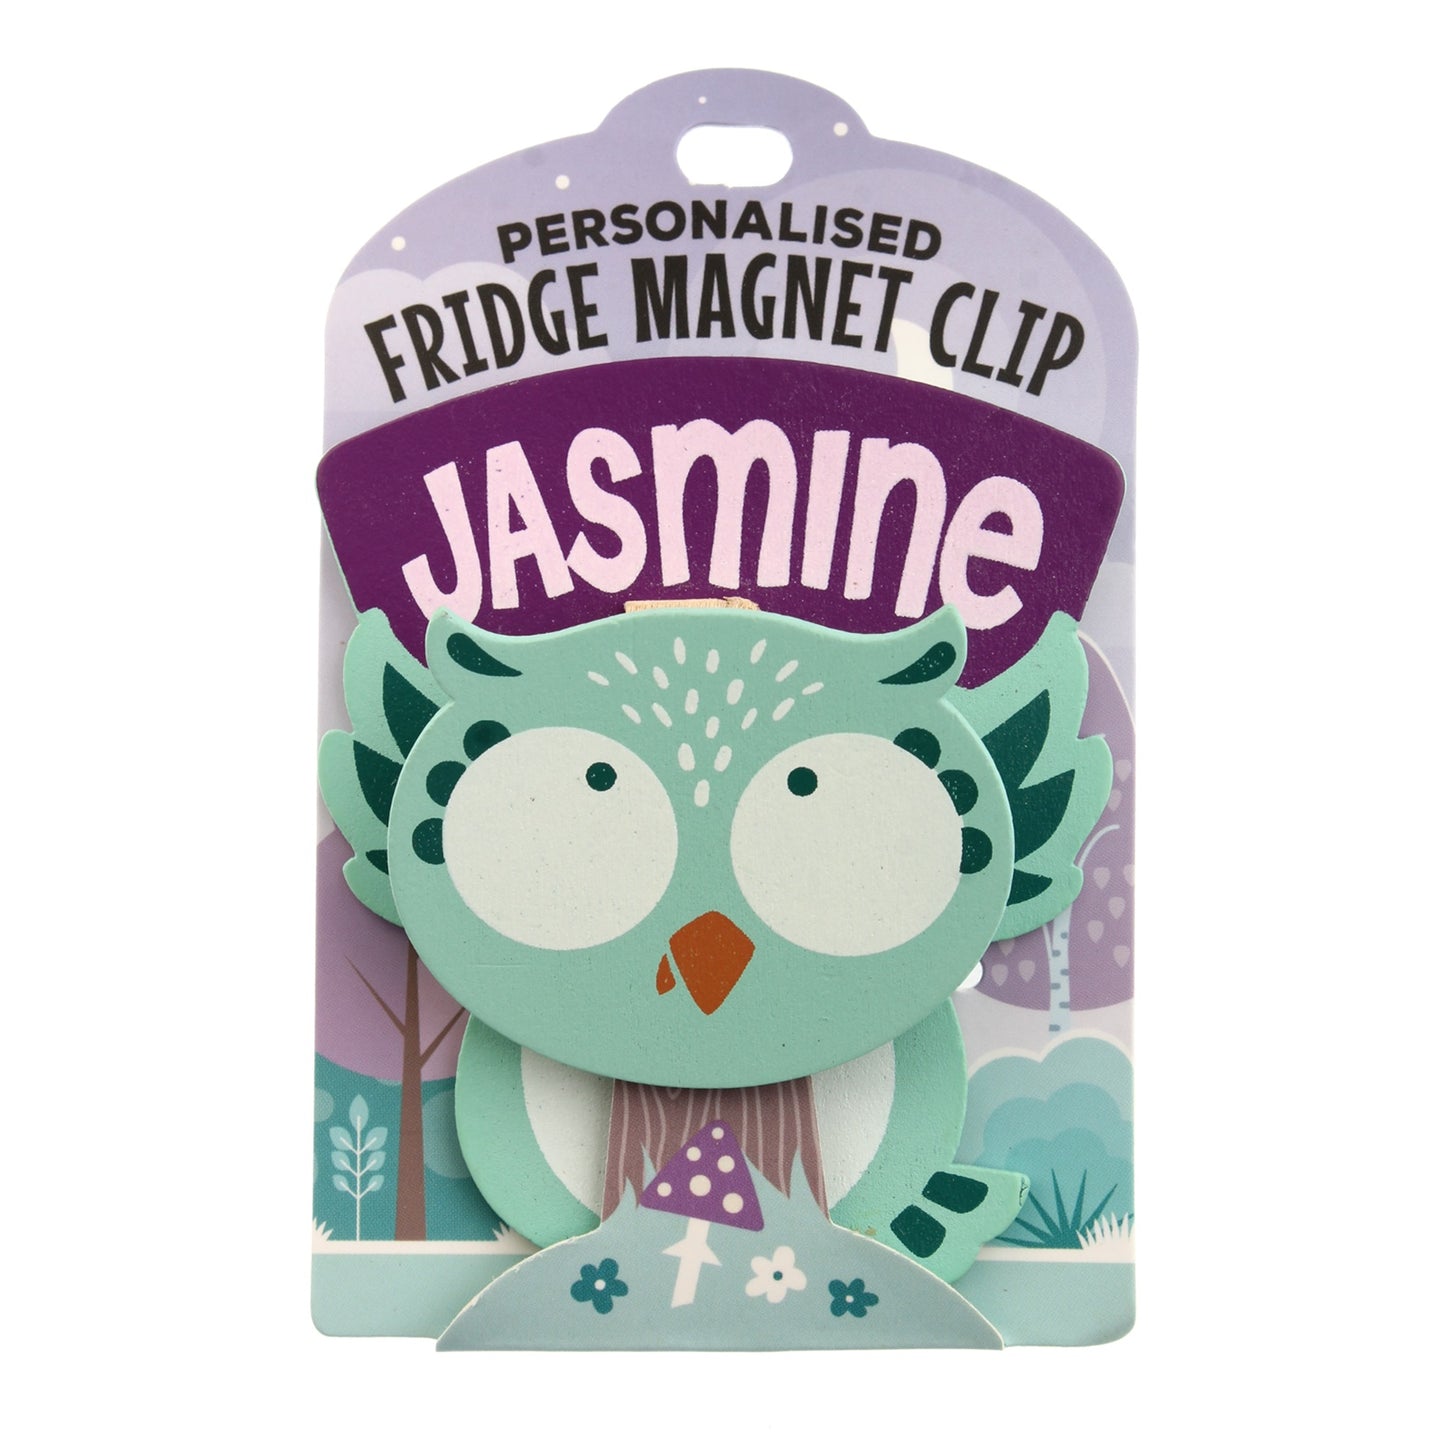 Fridge Magnet Clip Jasmine